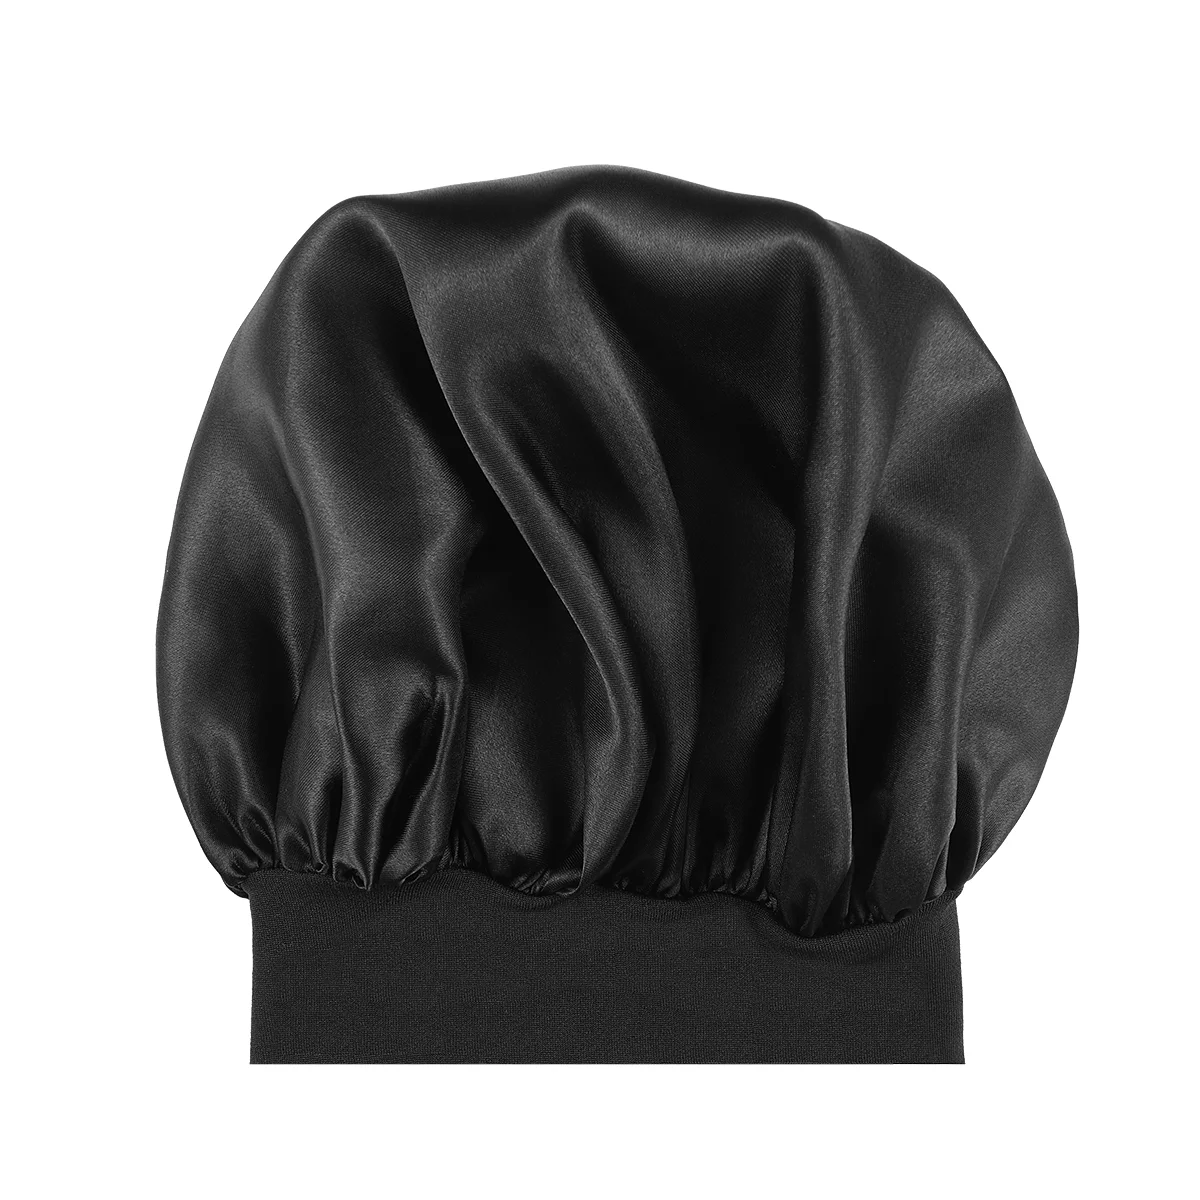 

SUPVOX Wide Side Sleeping Hat High Resilience Long Hair Bonnet Sleeping Women Men Unisex (Black, 56-58cm)